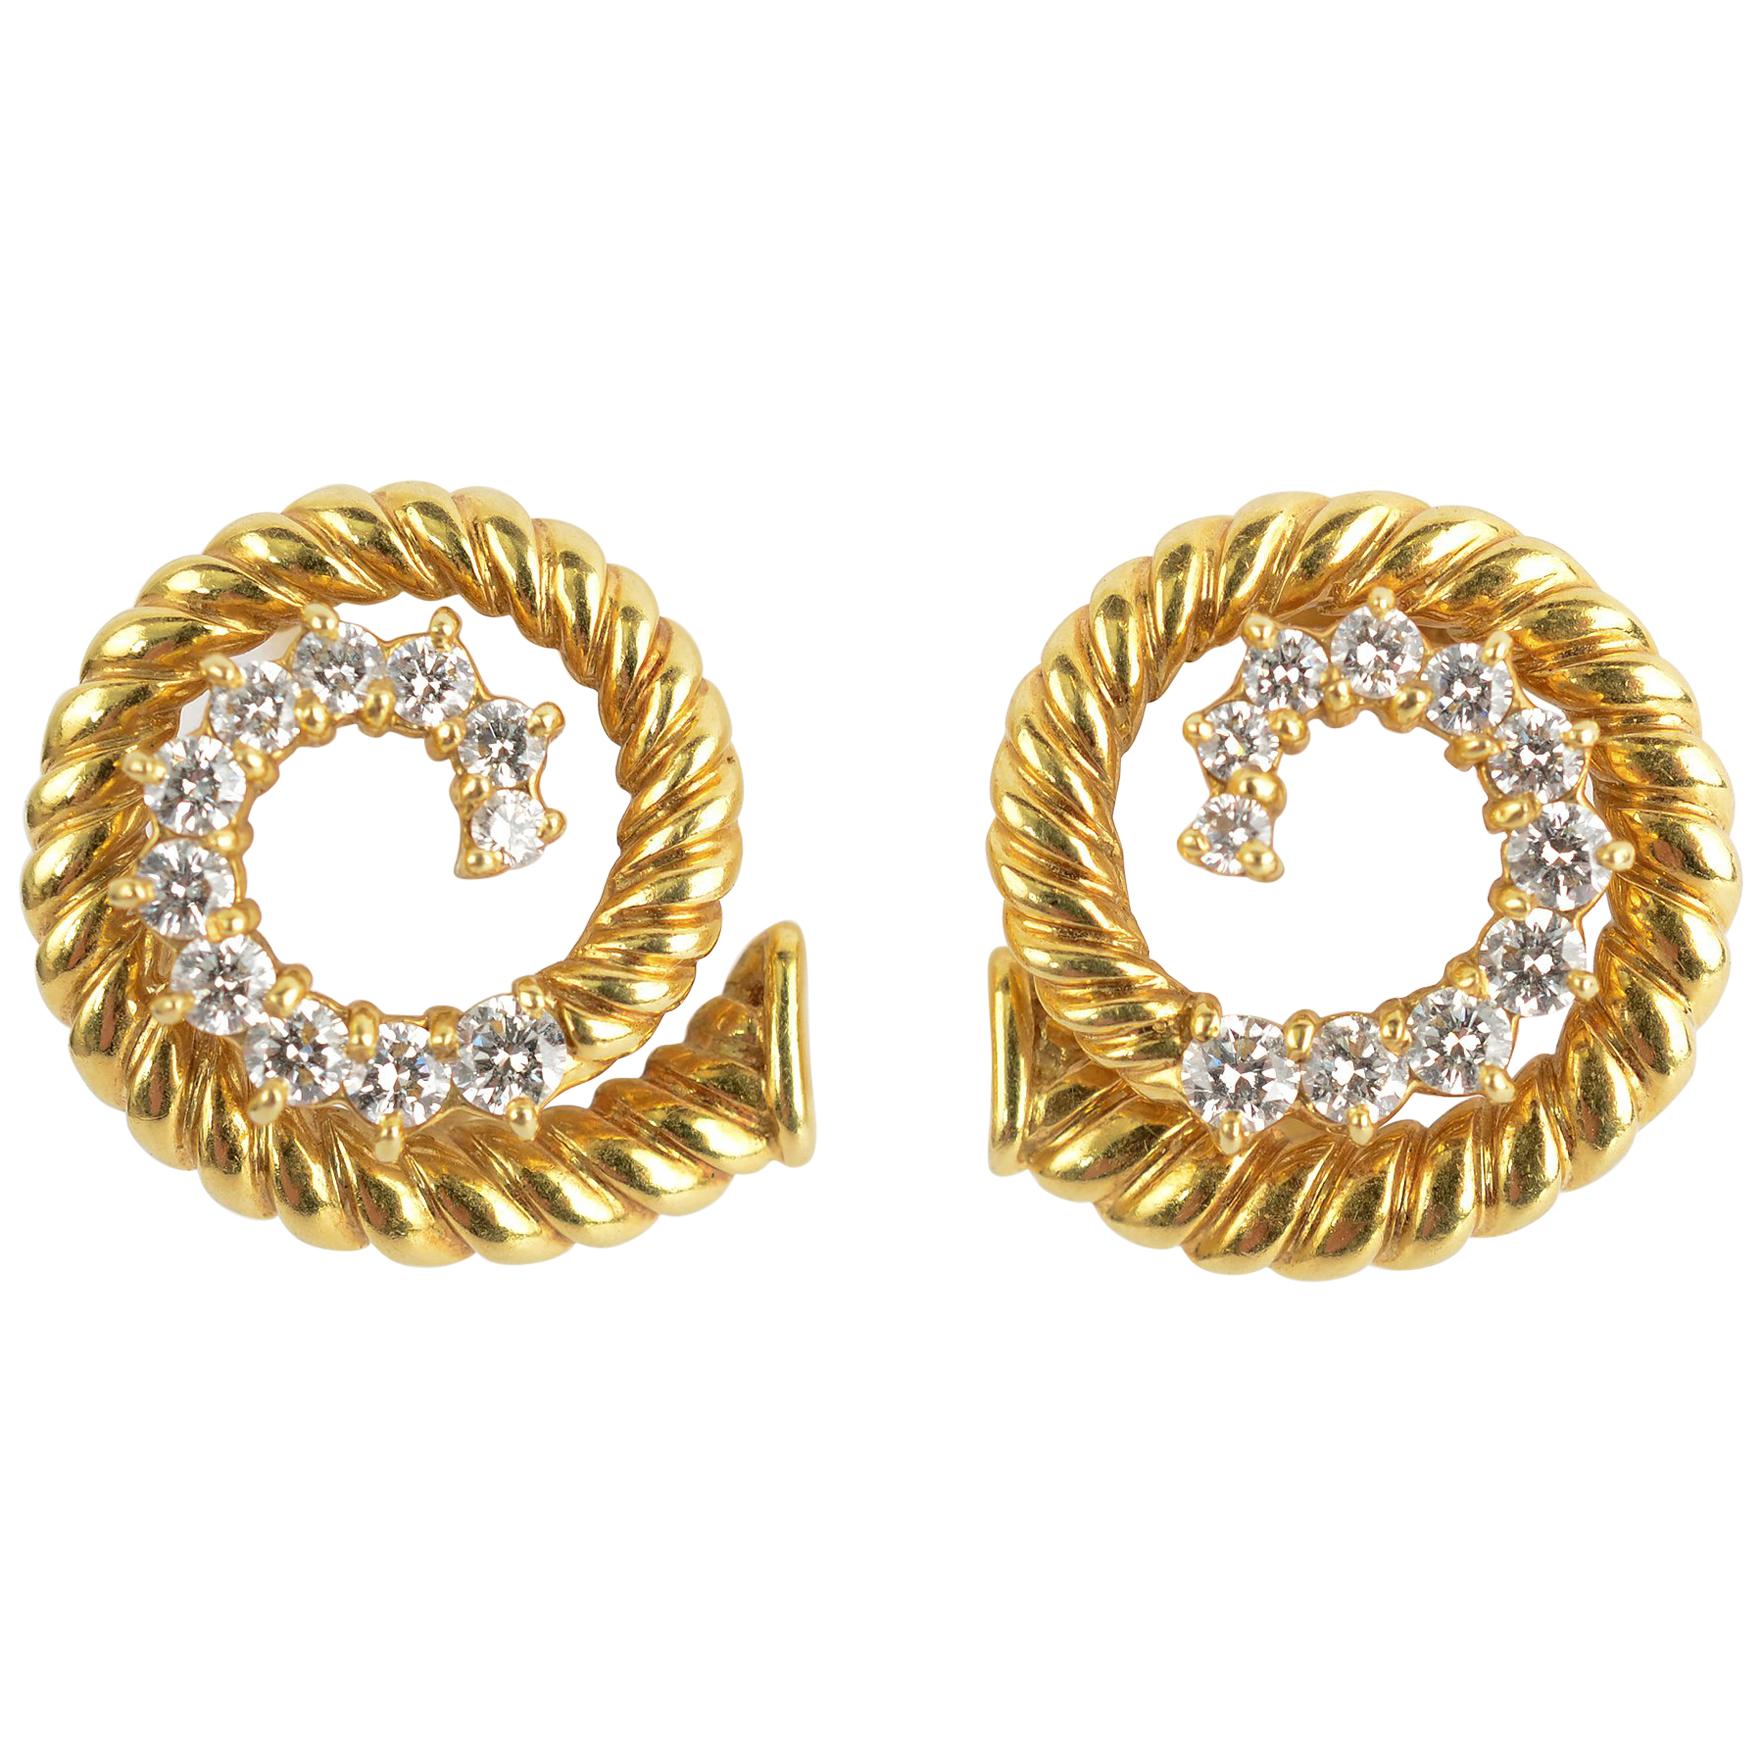 Jean Vitau Gold and Diamond Coil Earrings